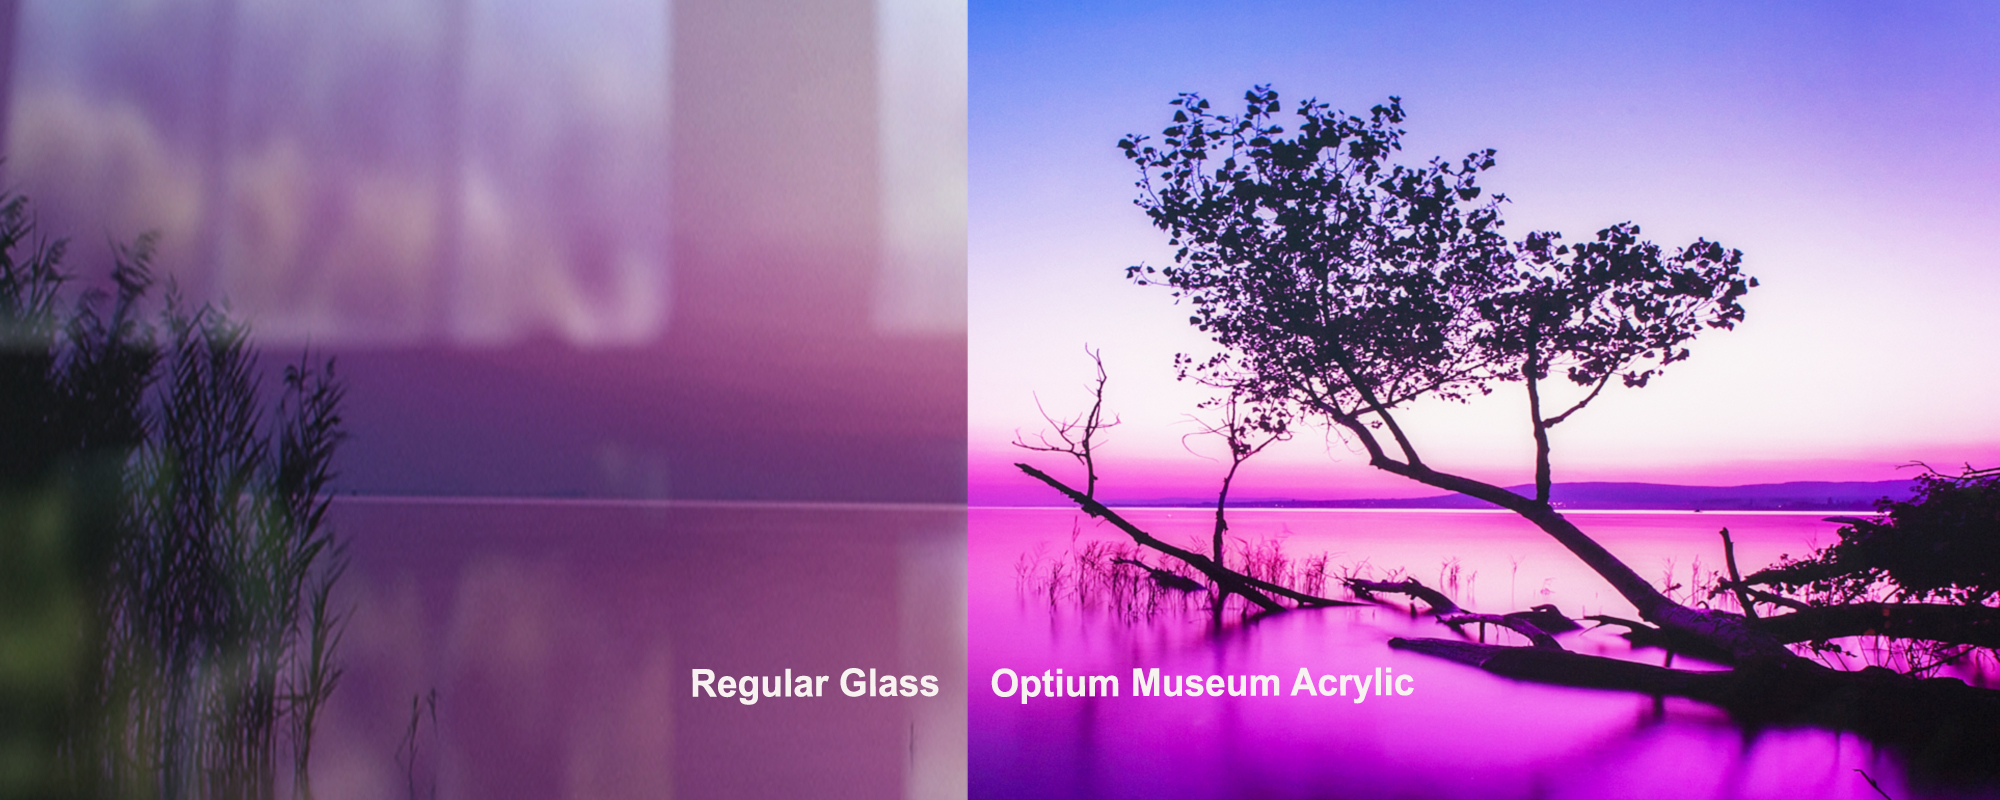 Regular glass vs Optium Museum Acrylic